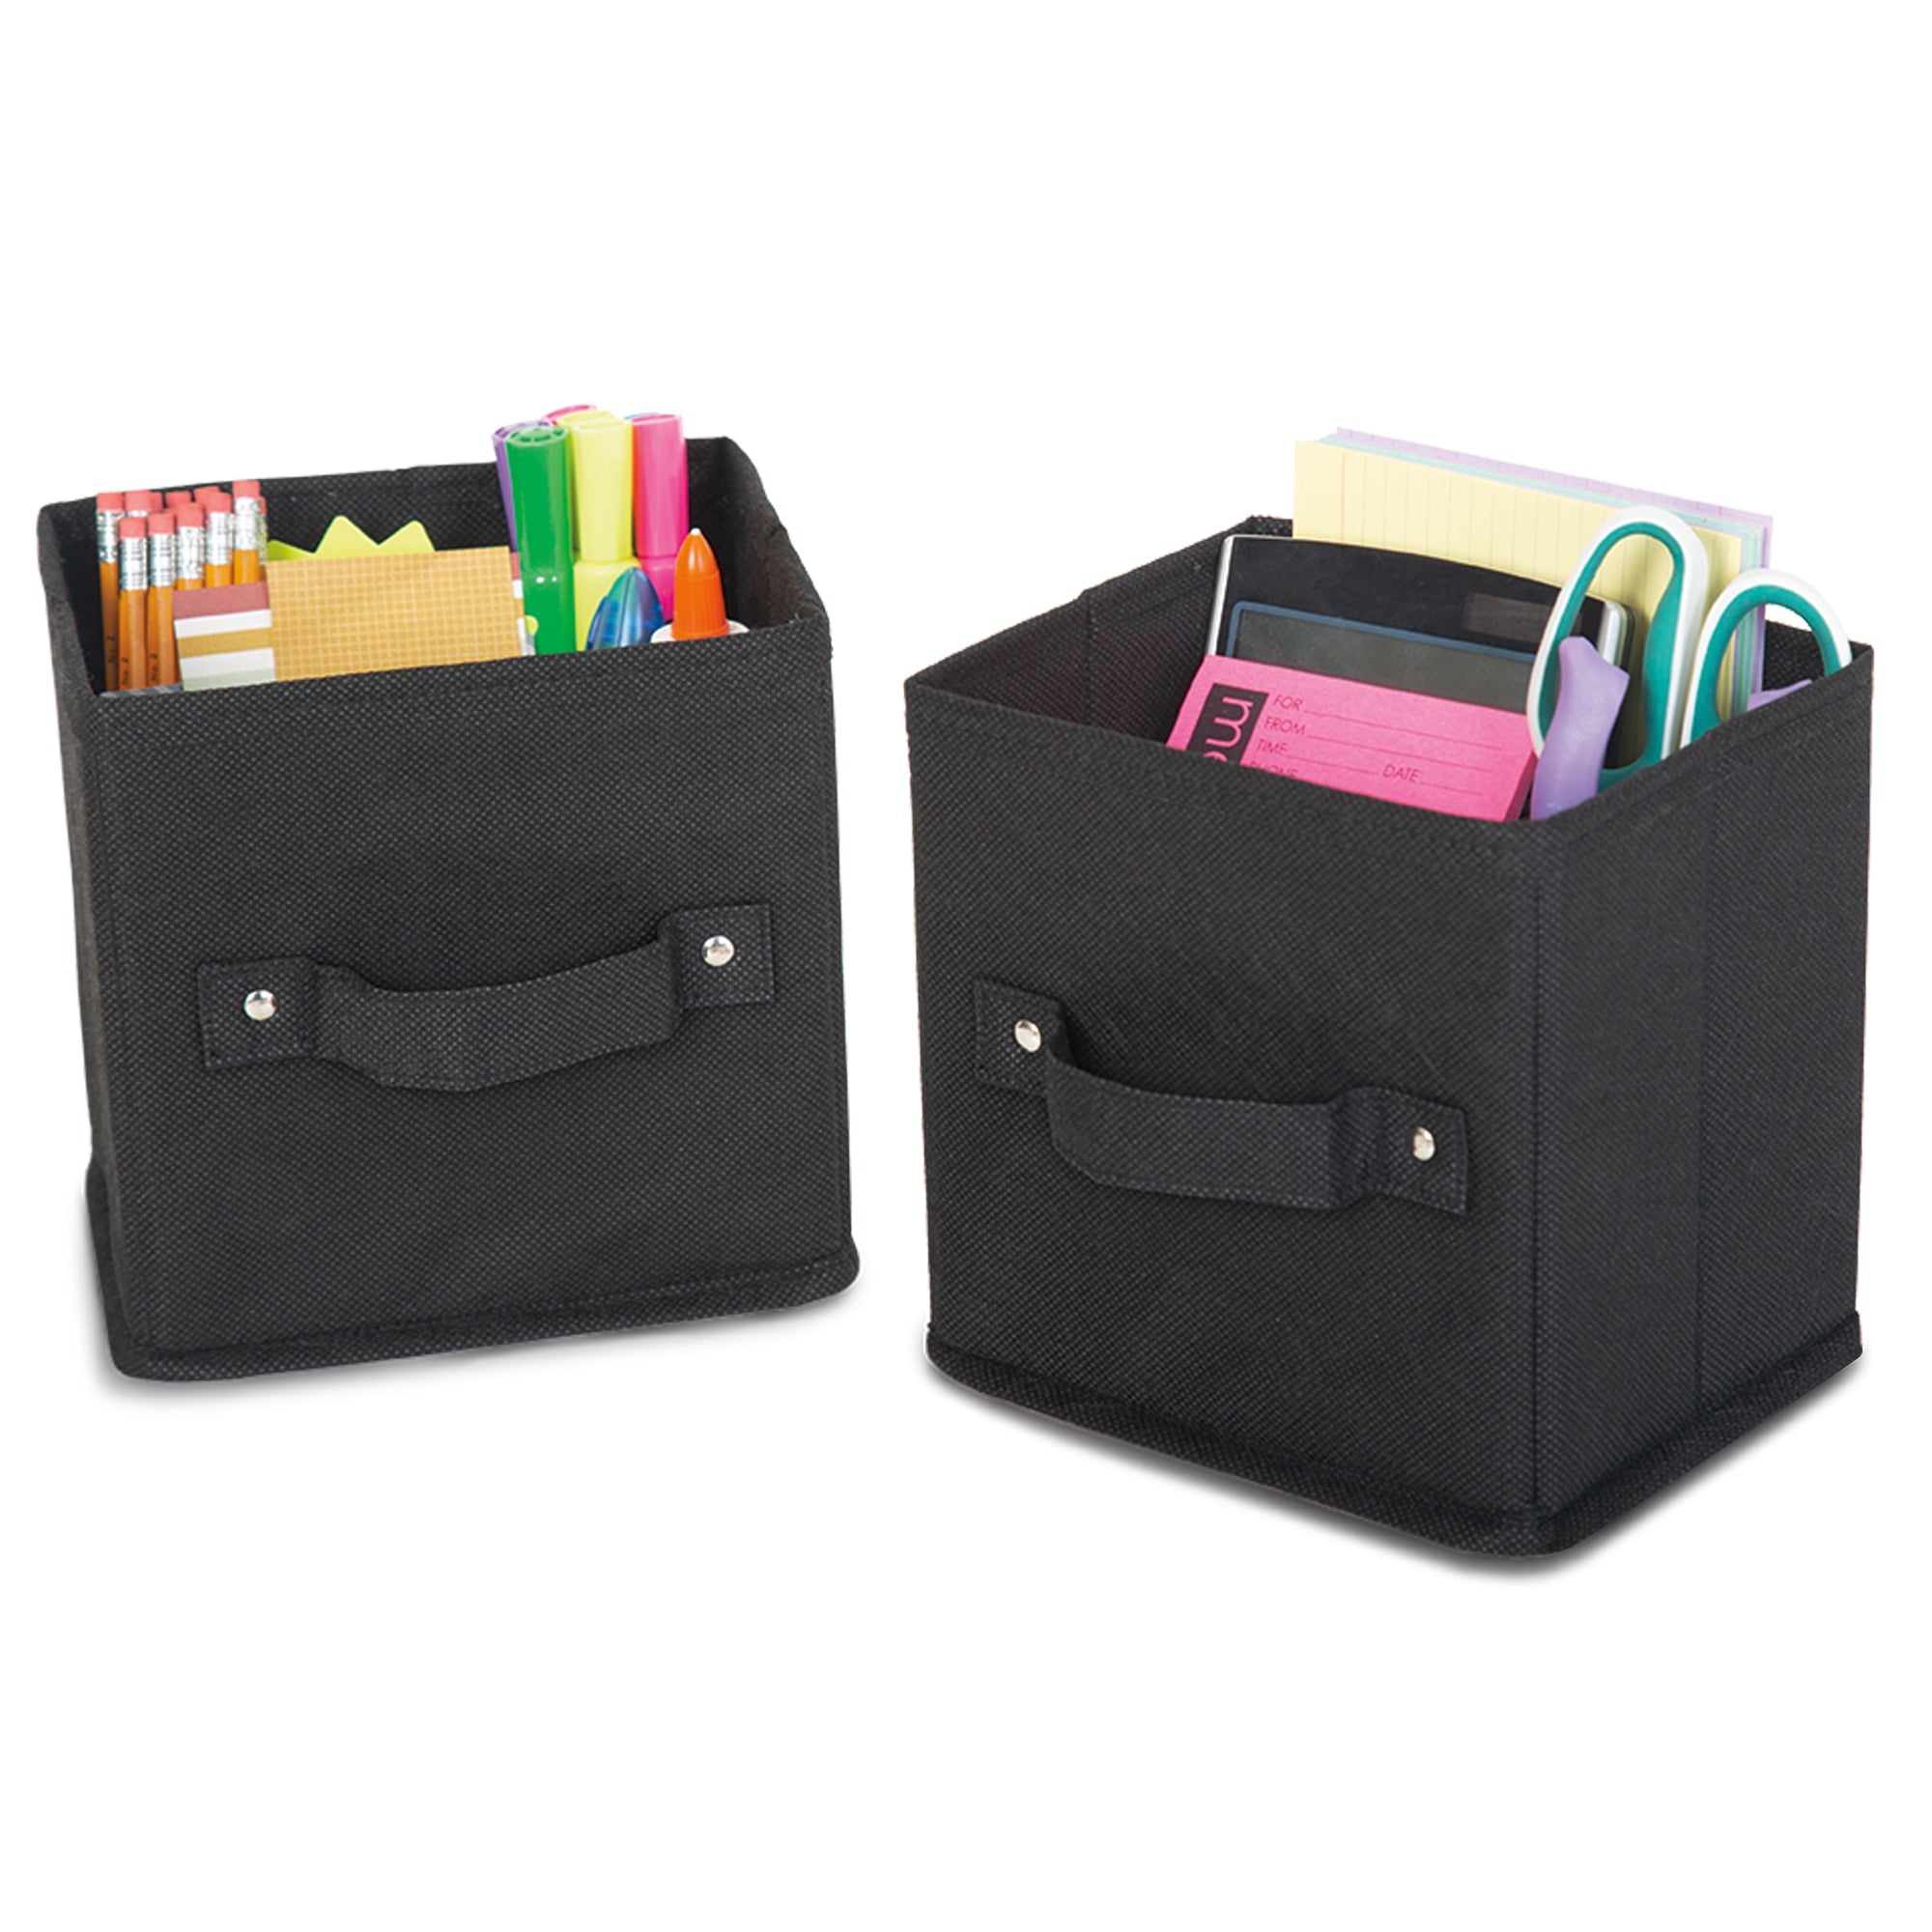 Storage Cube with Handle - 11 x 11 x 11 Inch - Black